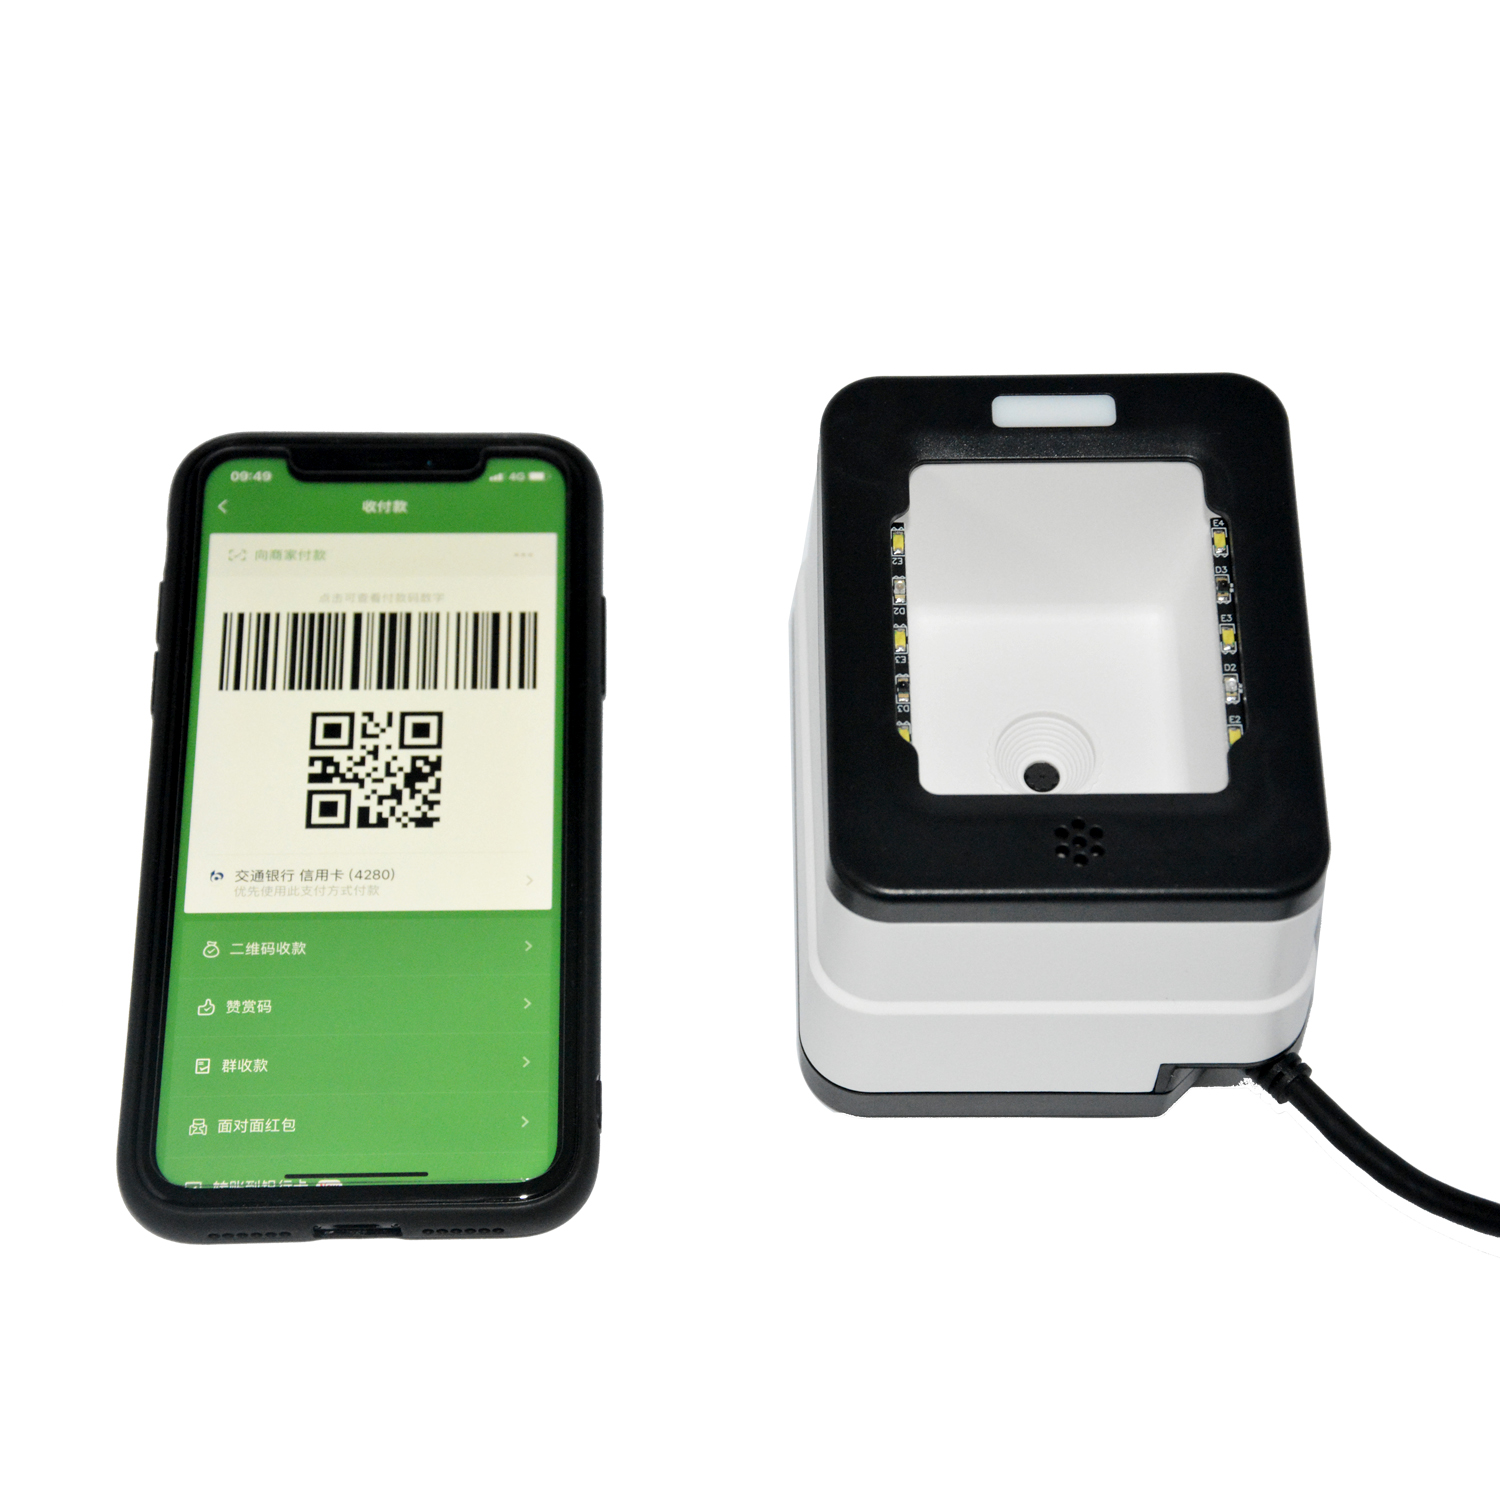 USB/RS232 Mobile Payment Box Einzelhandel 1D/2D Barcodescanner HS-2001C